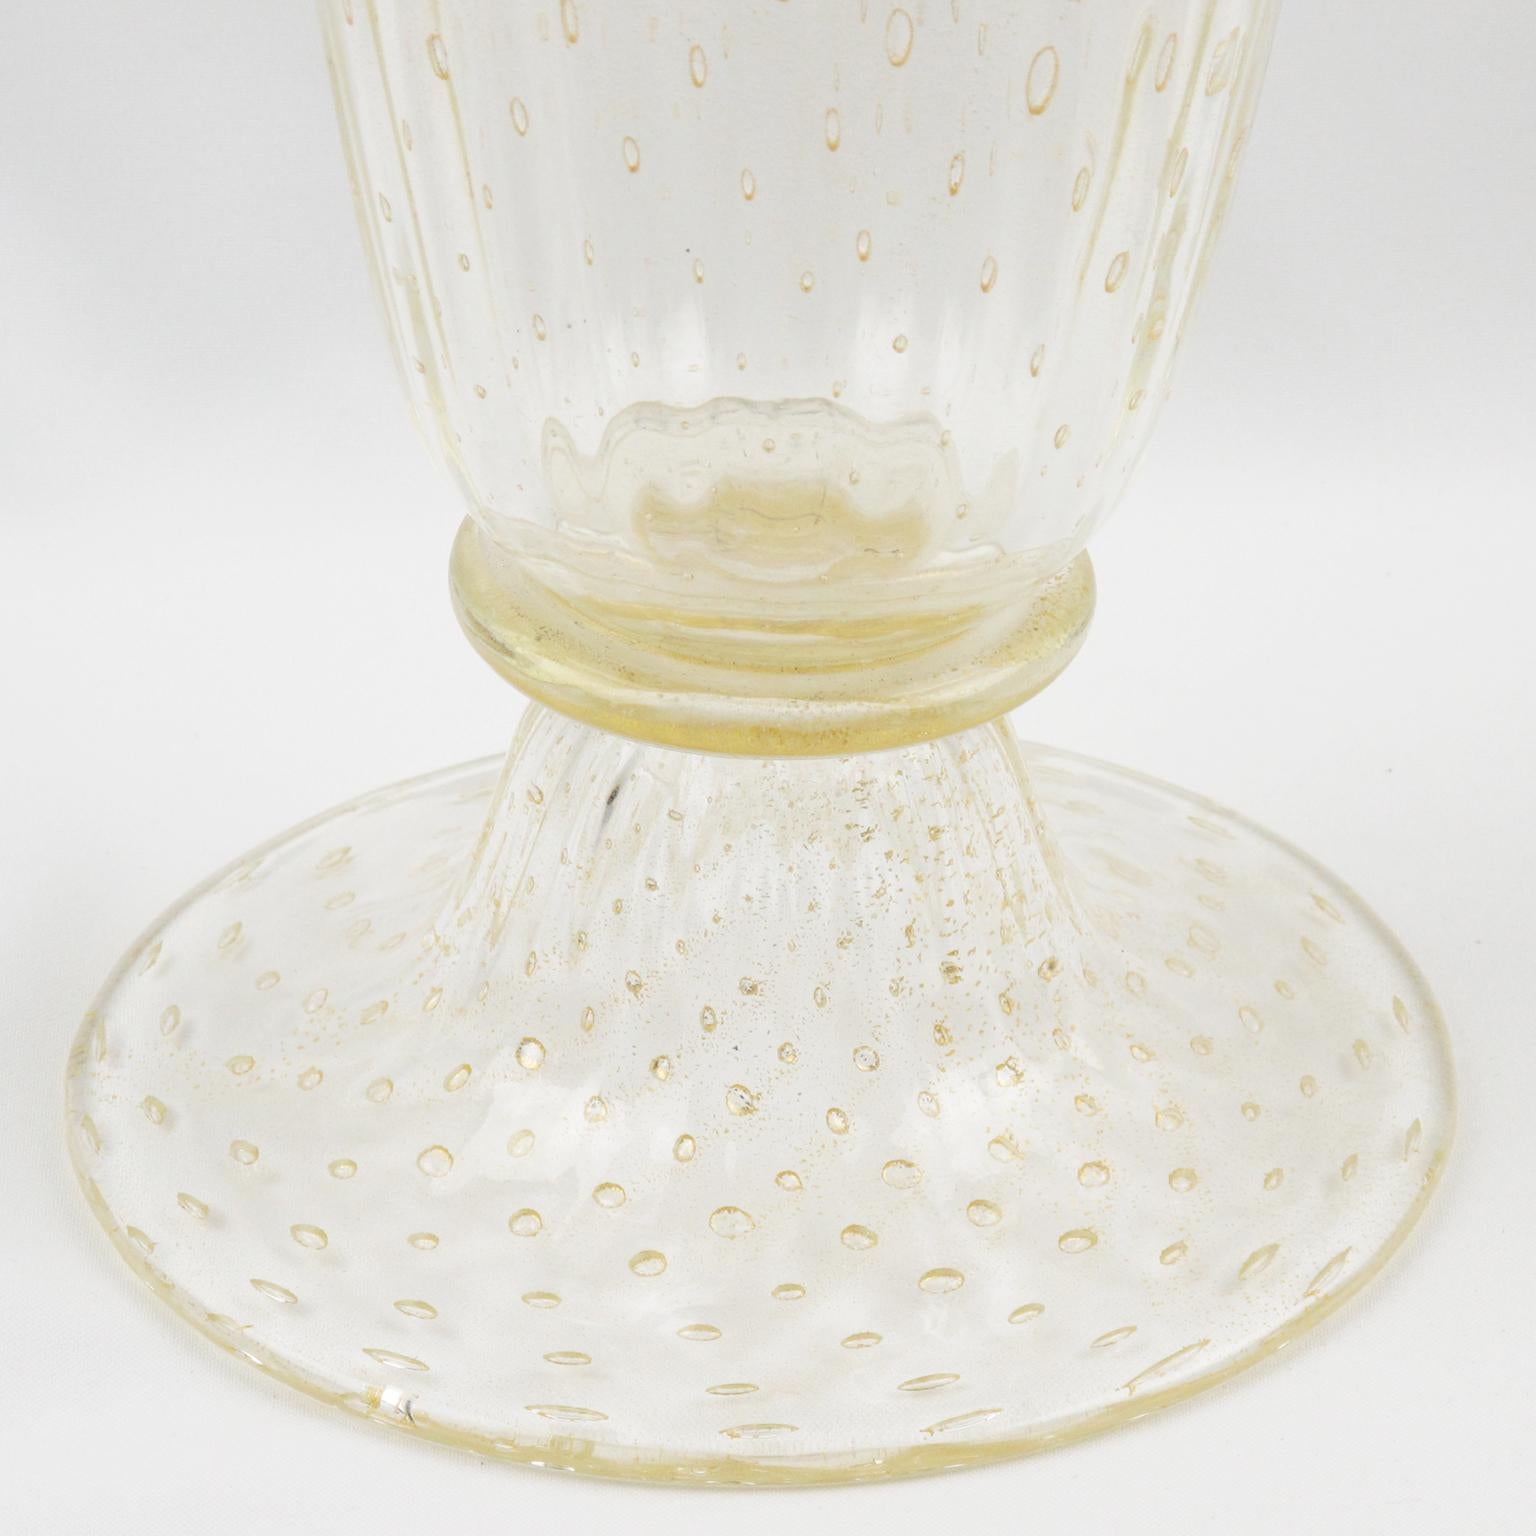 Murano Glass Italian Art Glass Murano Avventurina Sculptural Vase Gold Flakes and Bubbles